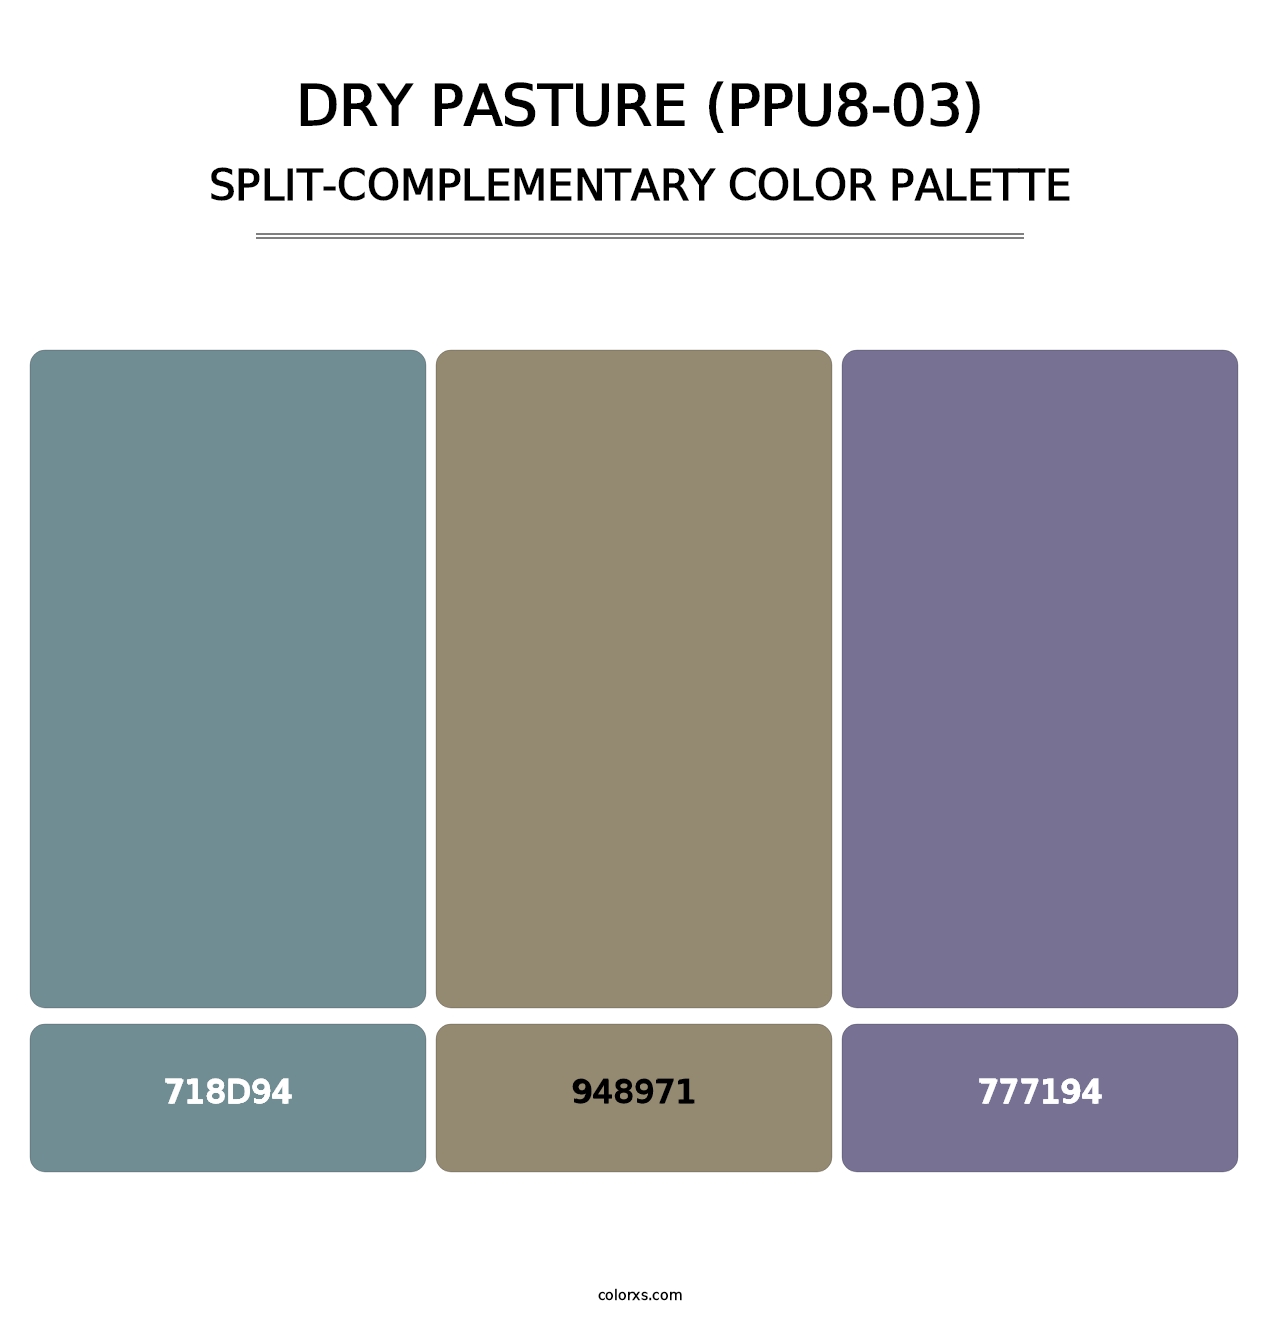 Dry Pasture (PPU8-03) - Split-Complementary Color Palette